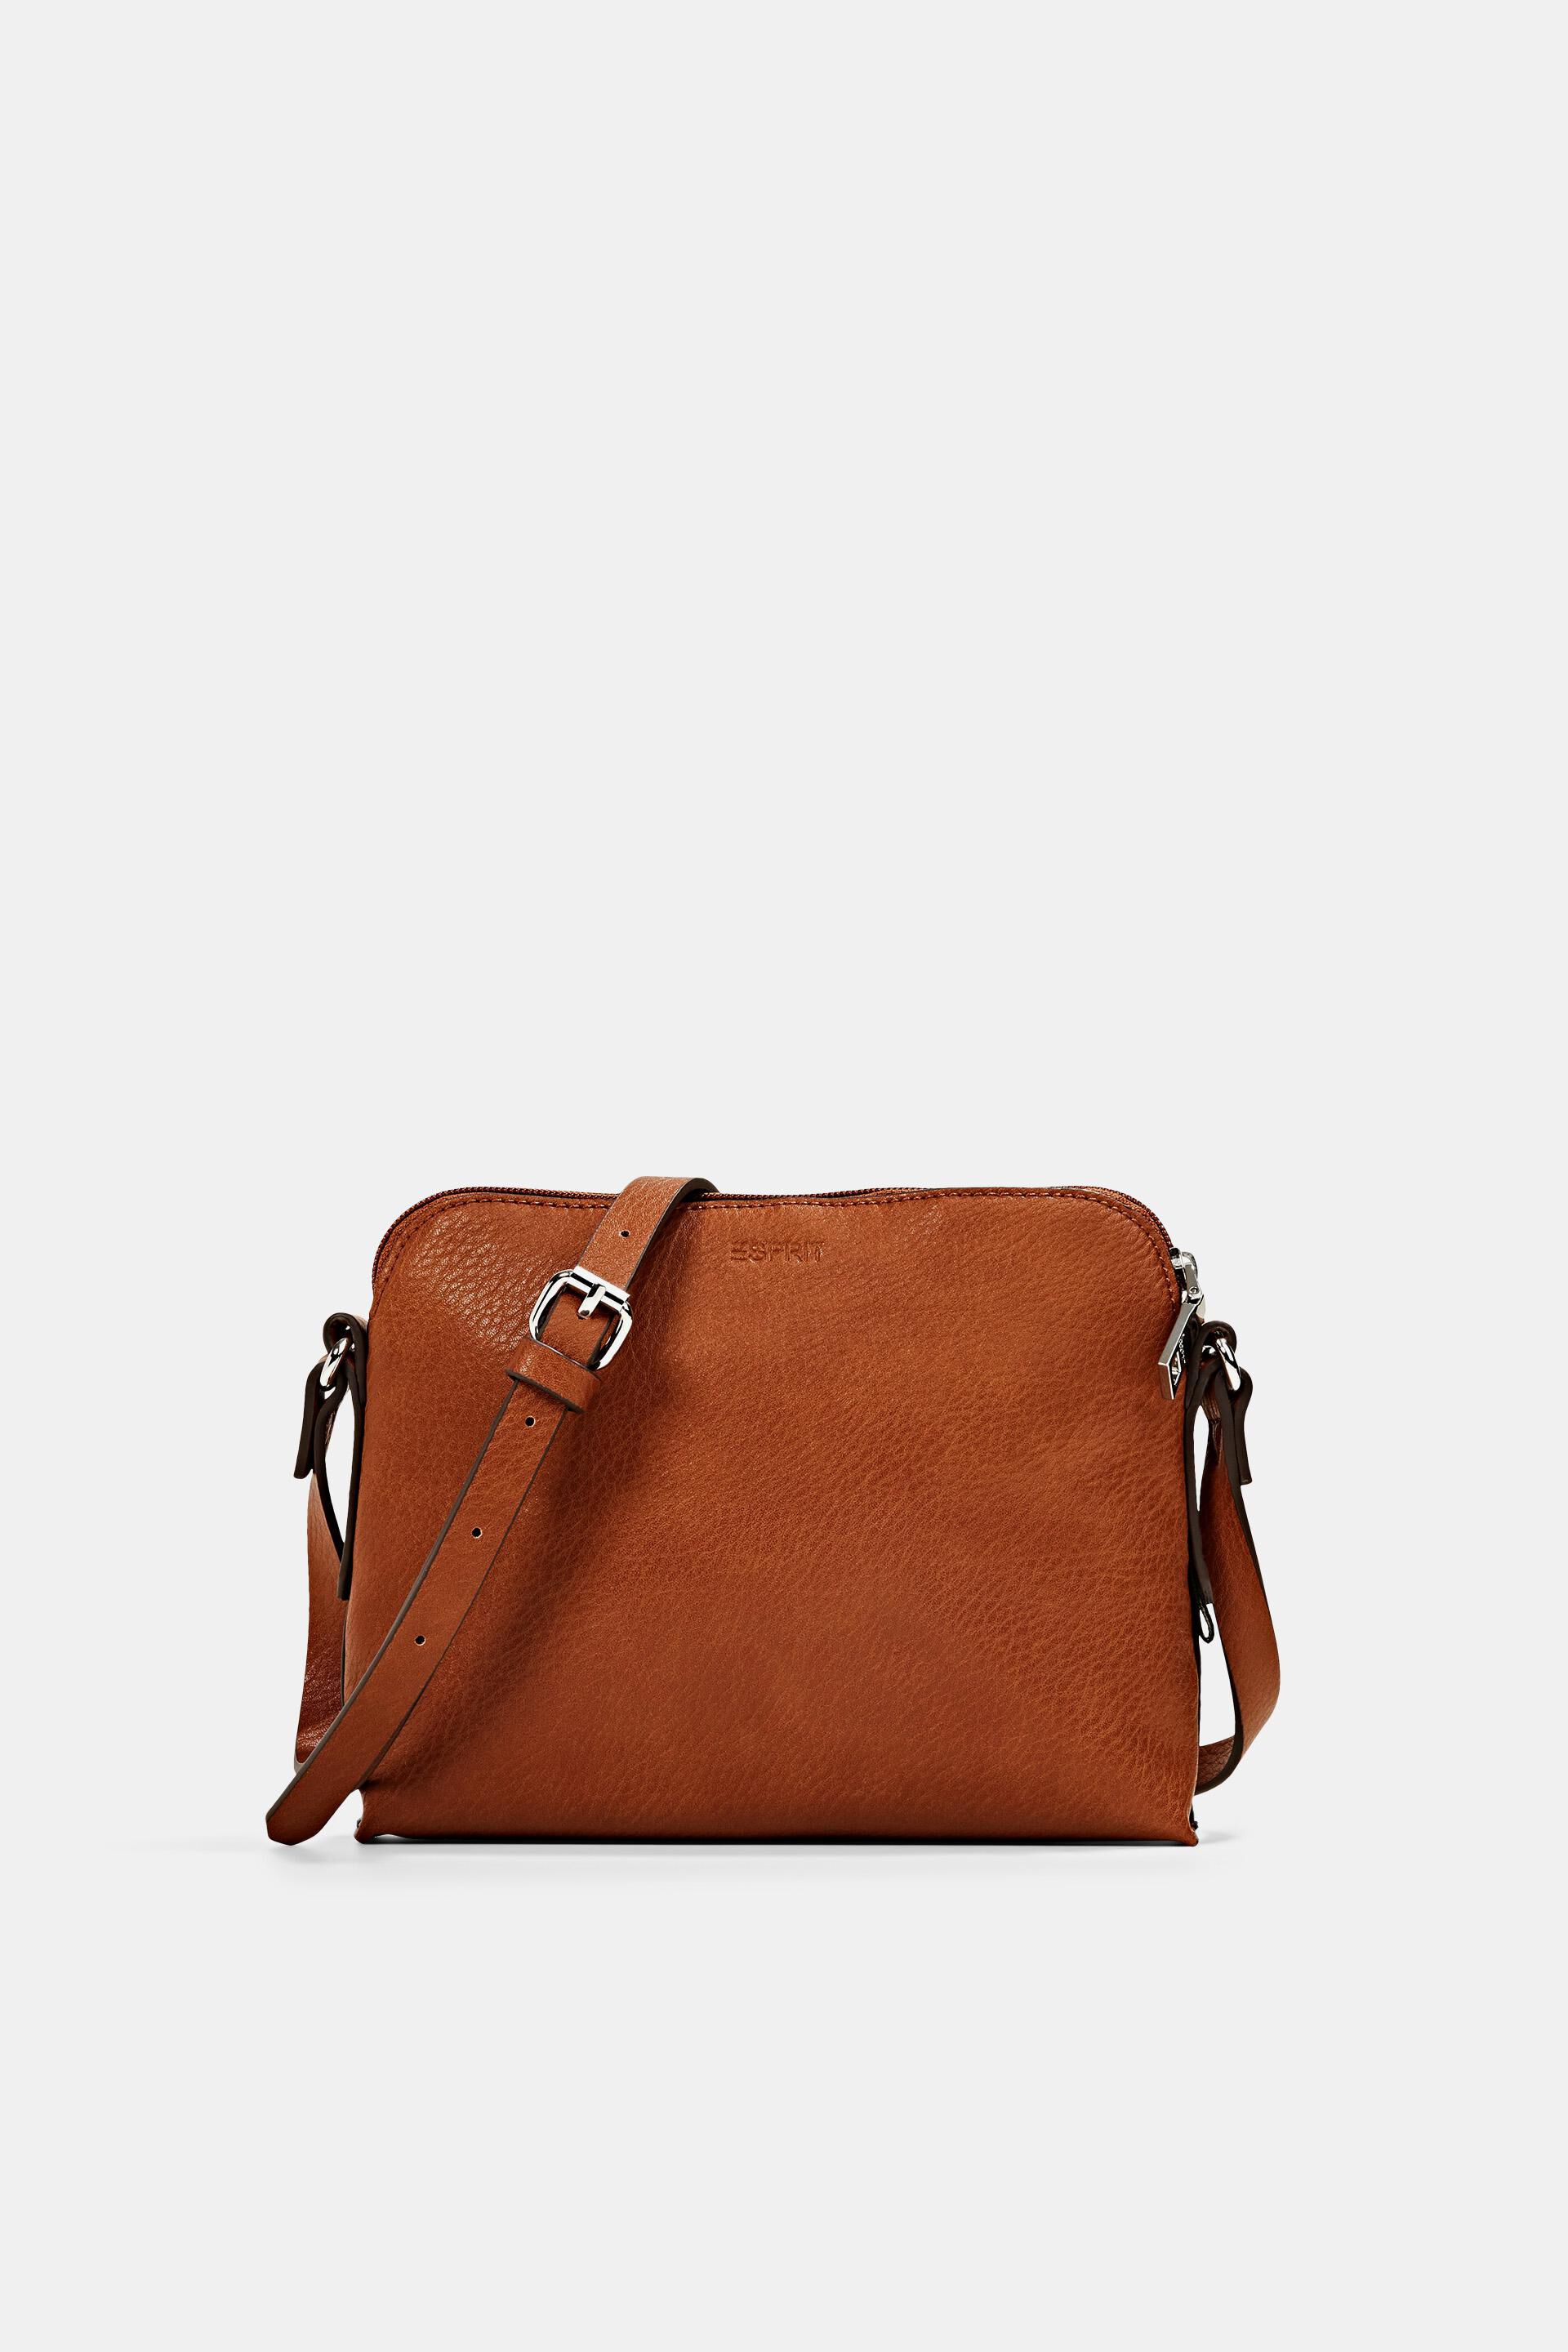 WOMEN FASHION Bags Leatherette Brown Single NoName Crossboyd bag discount 82% 